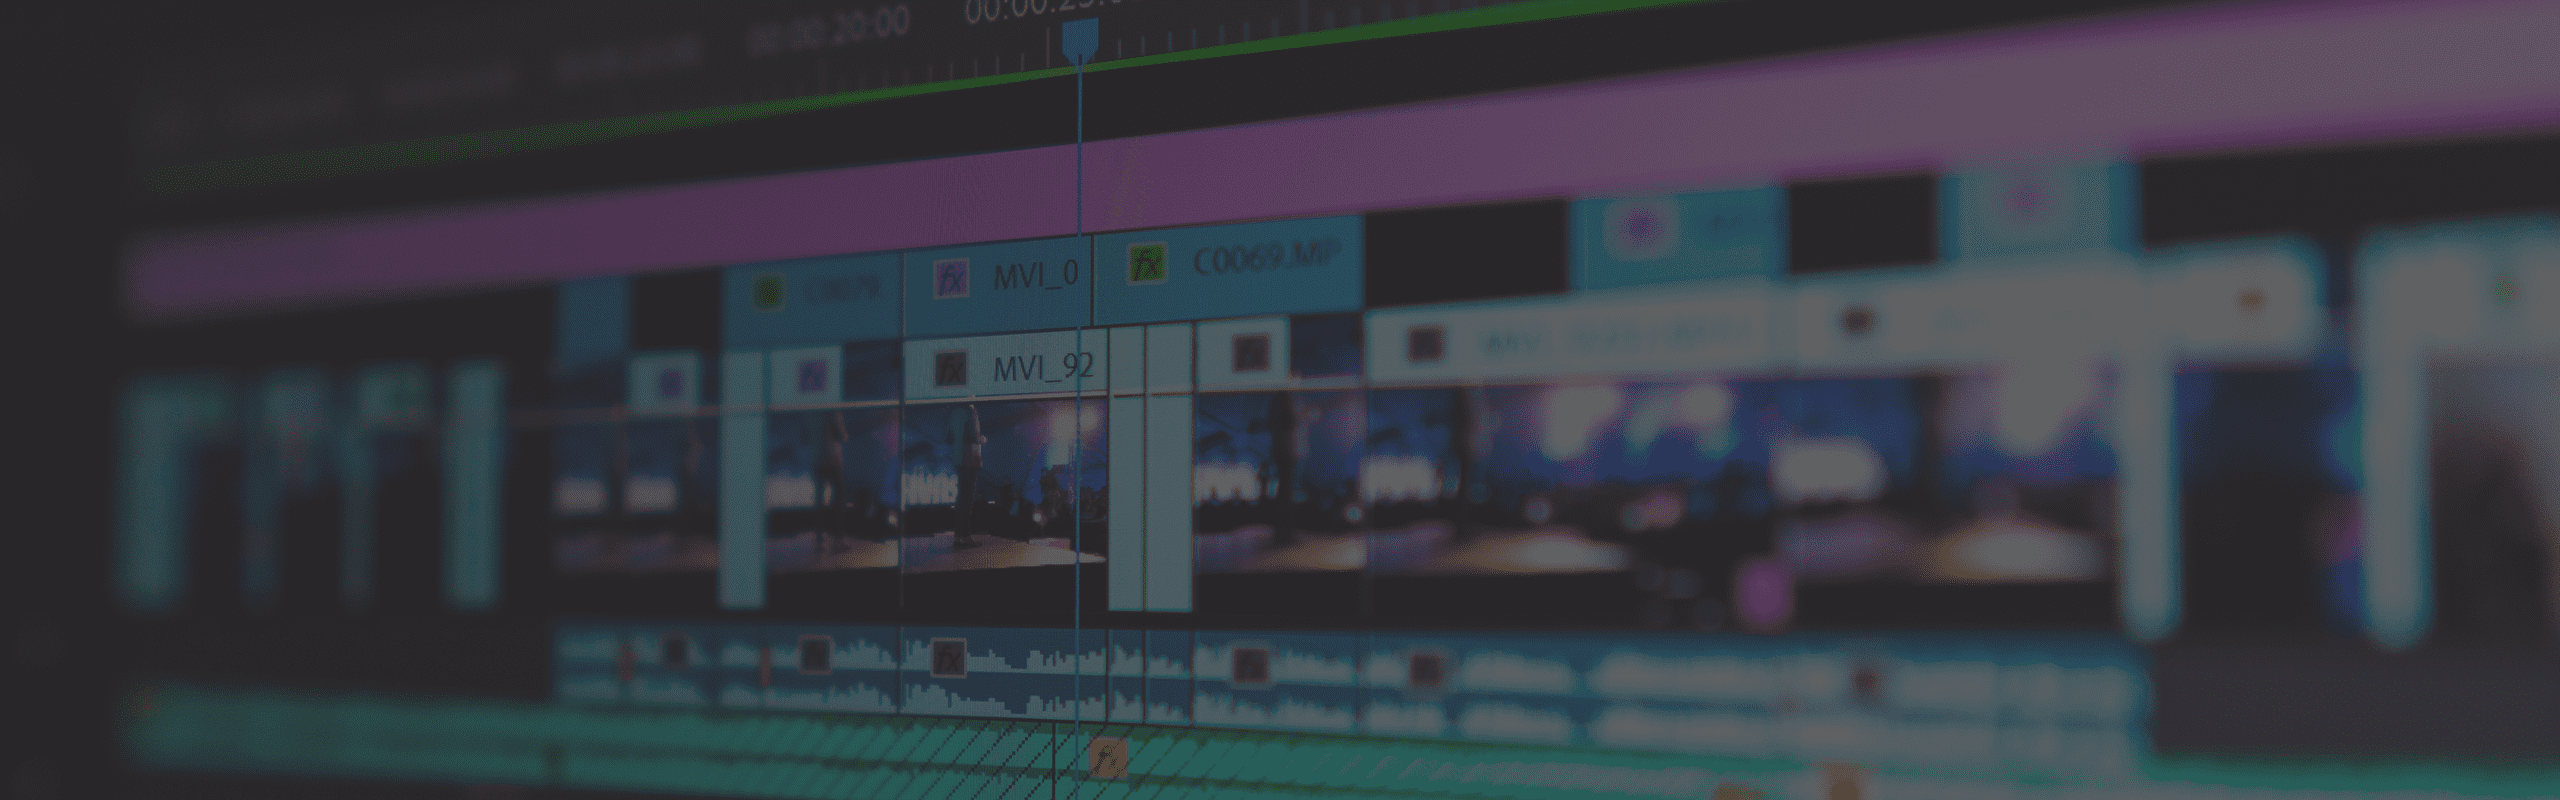 Video Editing Workflow Page Header